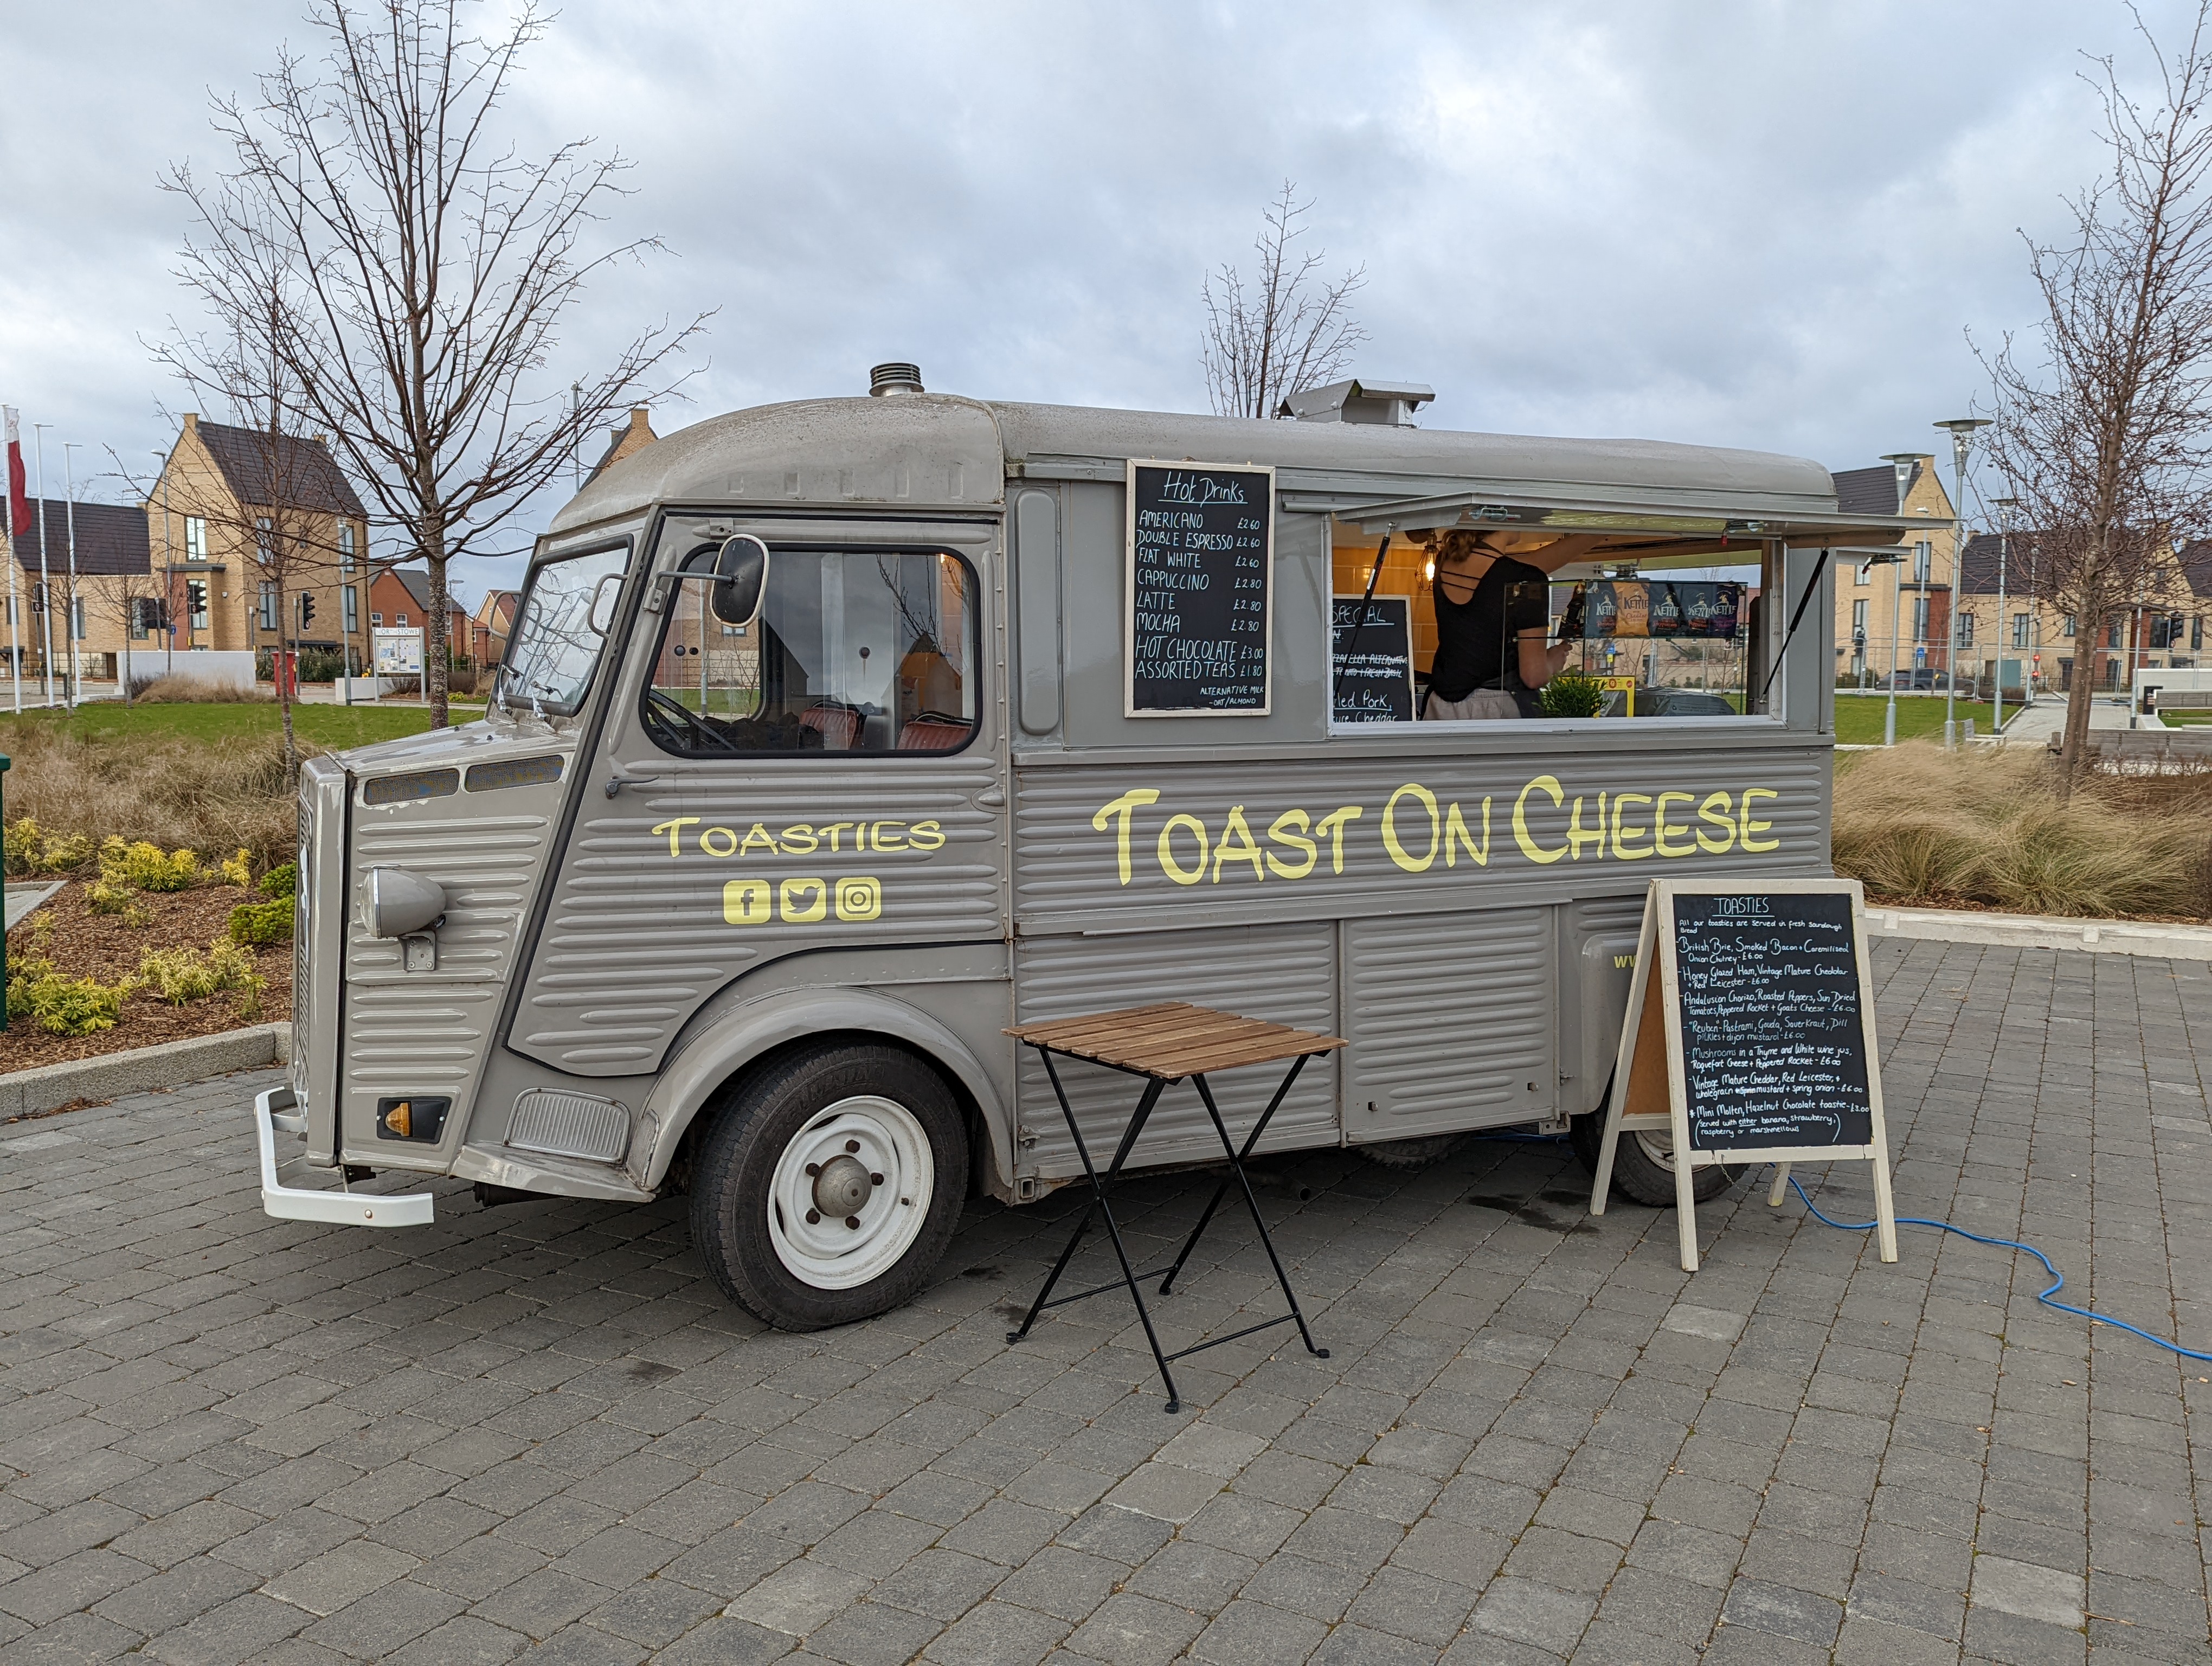 Toast On Cheese – Northstowe